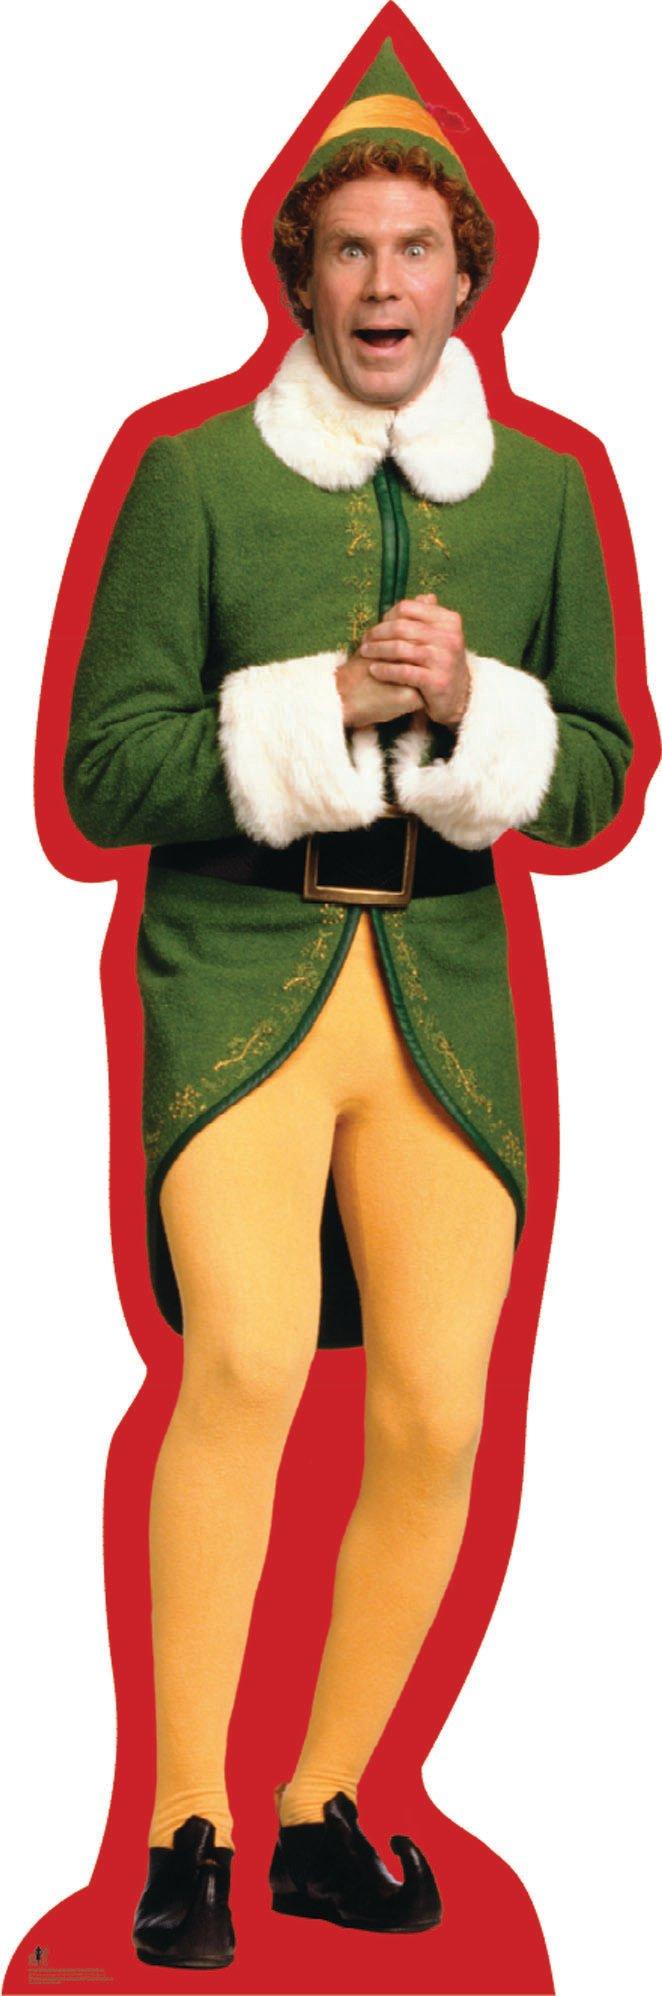 Buddy the Elf Pose 1 Life-Size Cardboard Cutout, 6ft - Elf